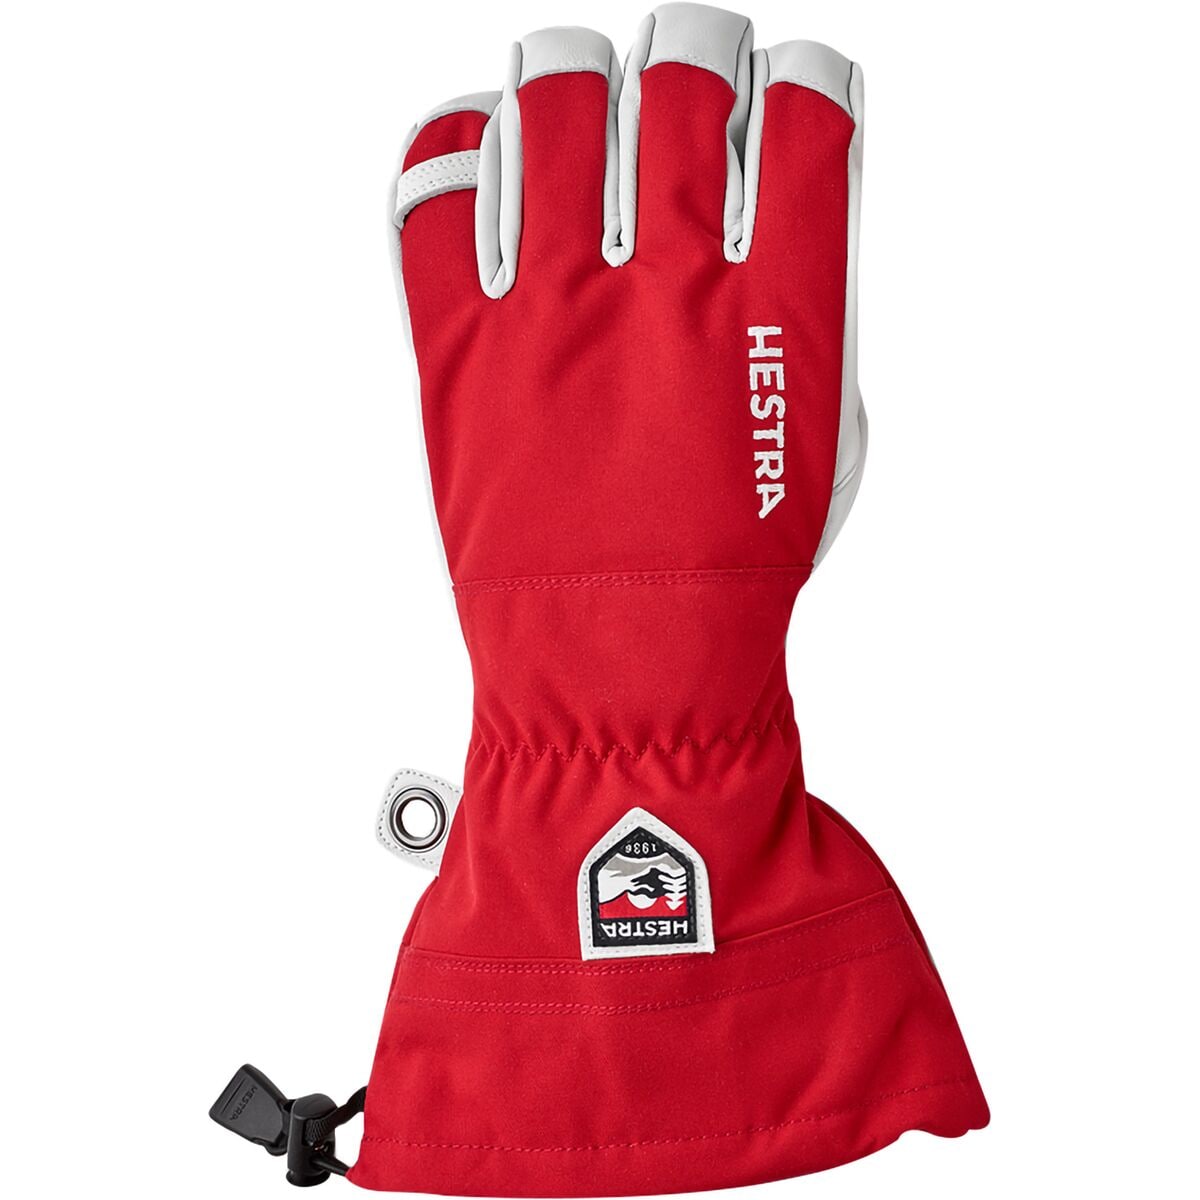 2020 Men's Hestra Army Leather Heli 5 Finger Ski Gloves Size 11 Royal Blue 30570 